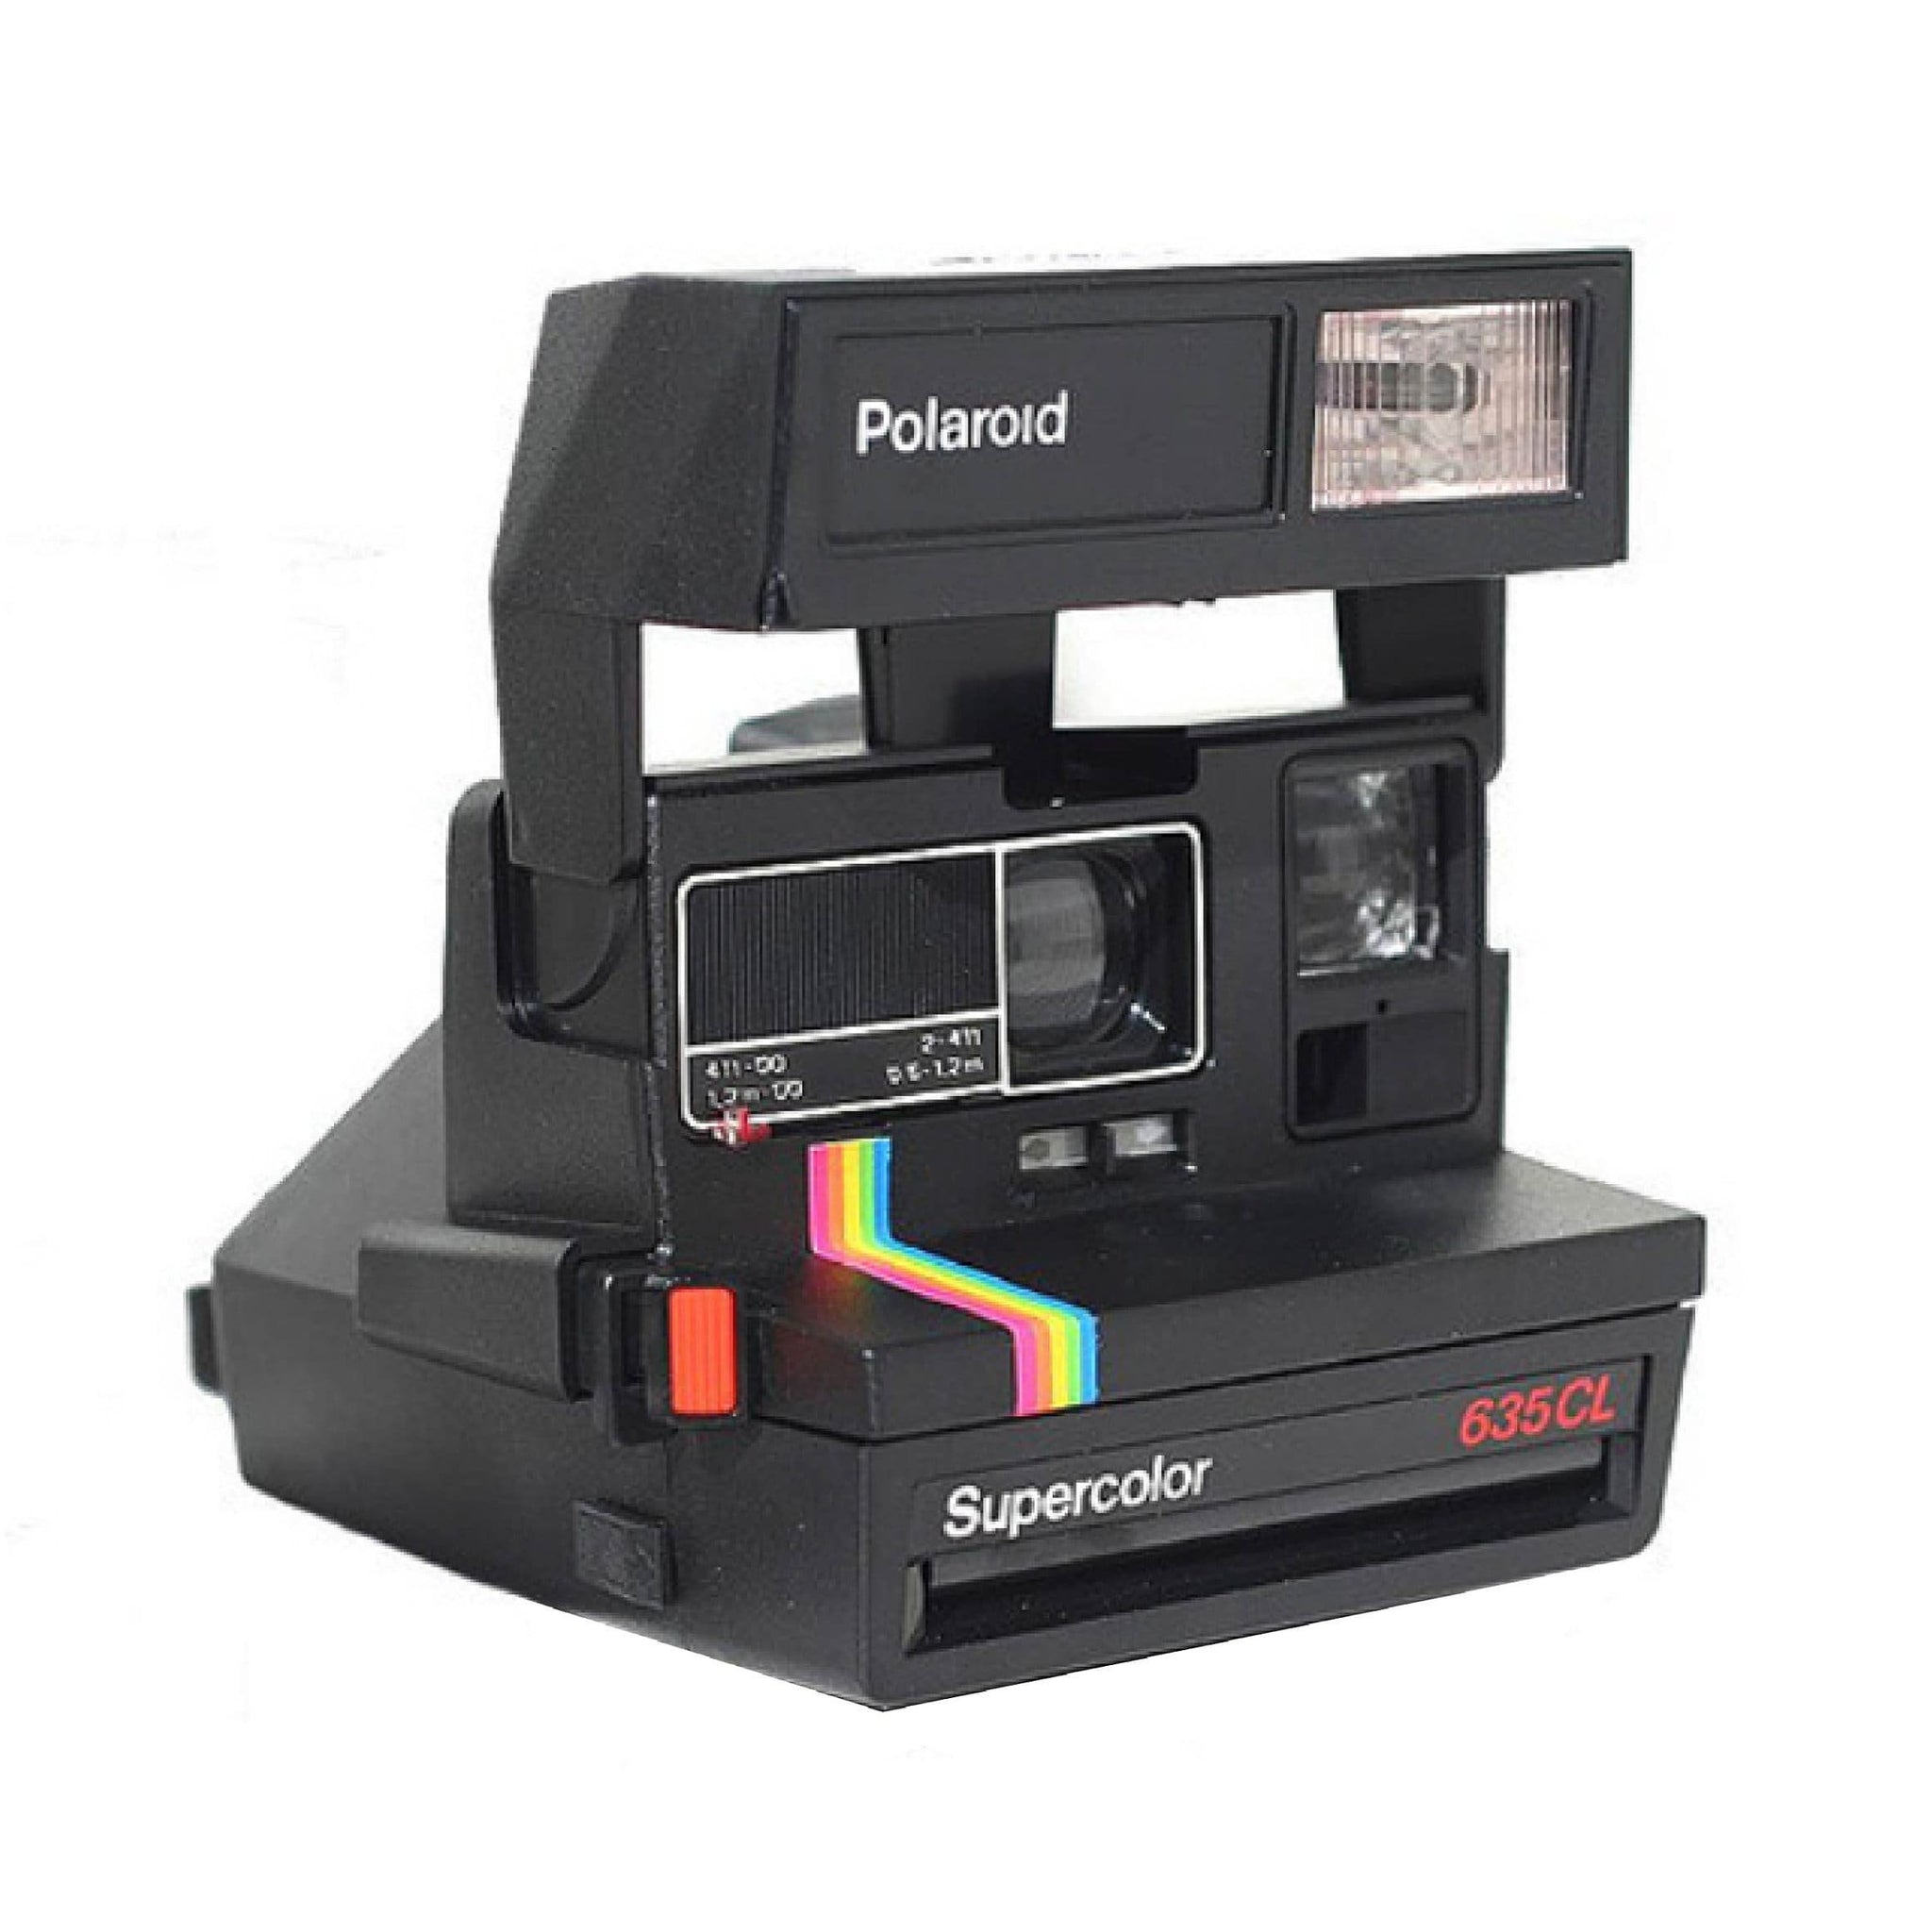 Vintage Polaroid Cameras Bundle - Polaroid 600, 635 CL, Supercolor - Instant Photography Collection - Retro Instant Cameras